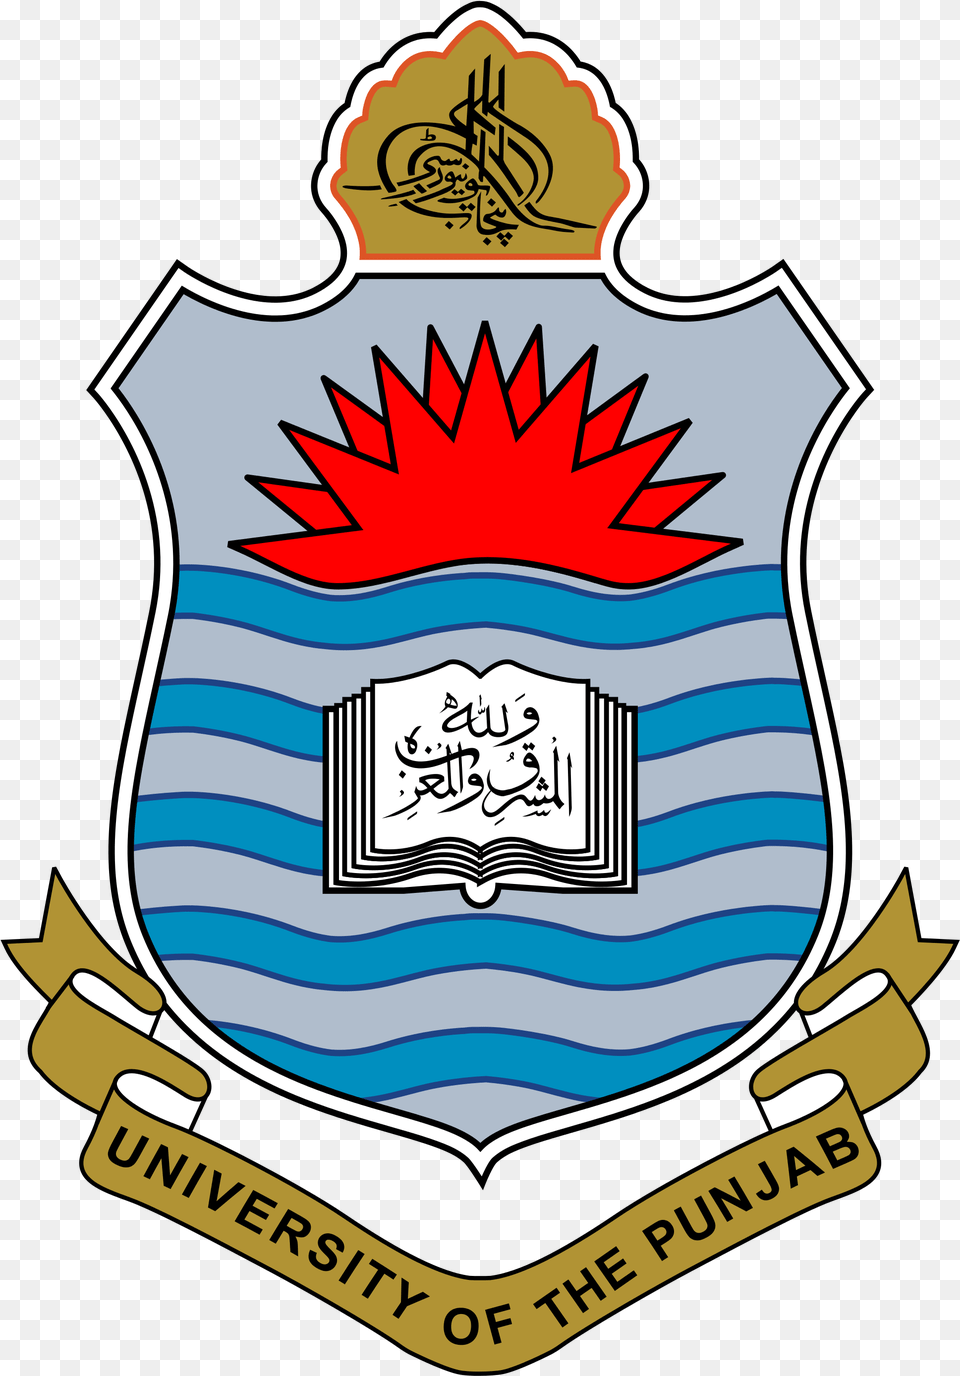 Open University Of The Punjab, Armor, Logo, Badge, Symbol Png Image